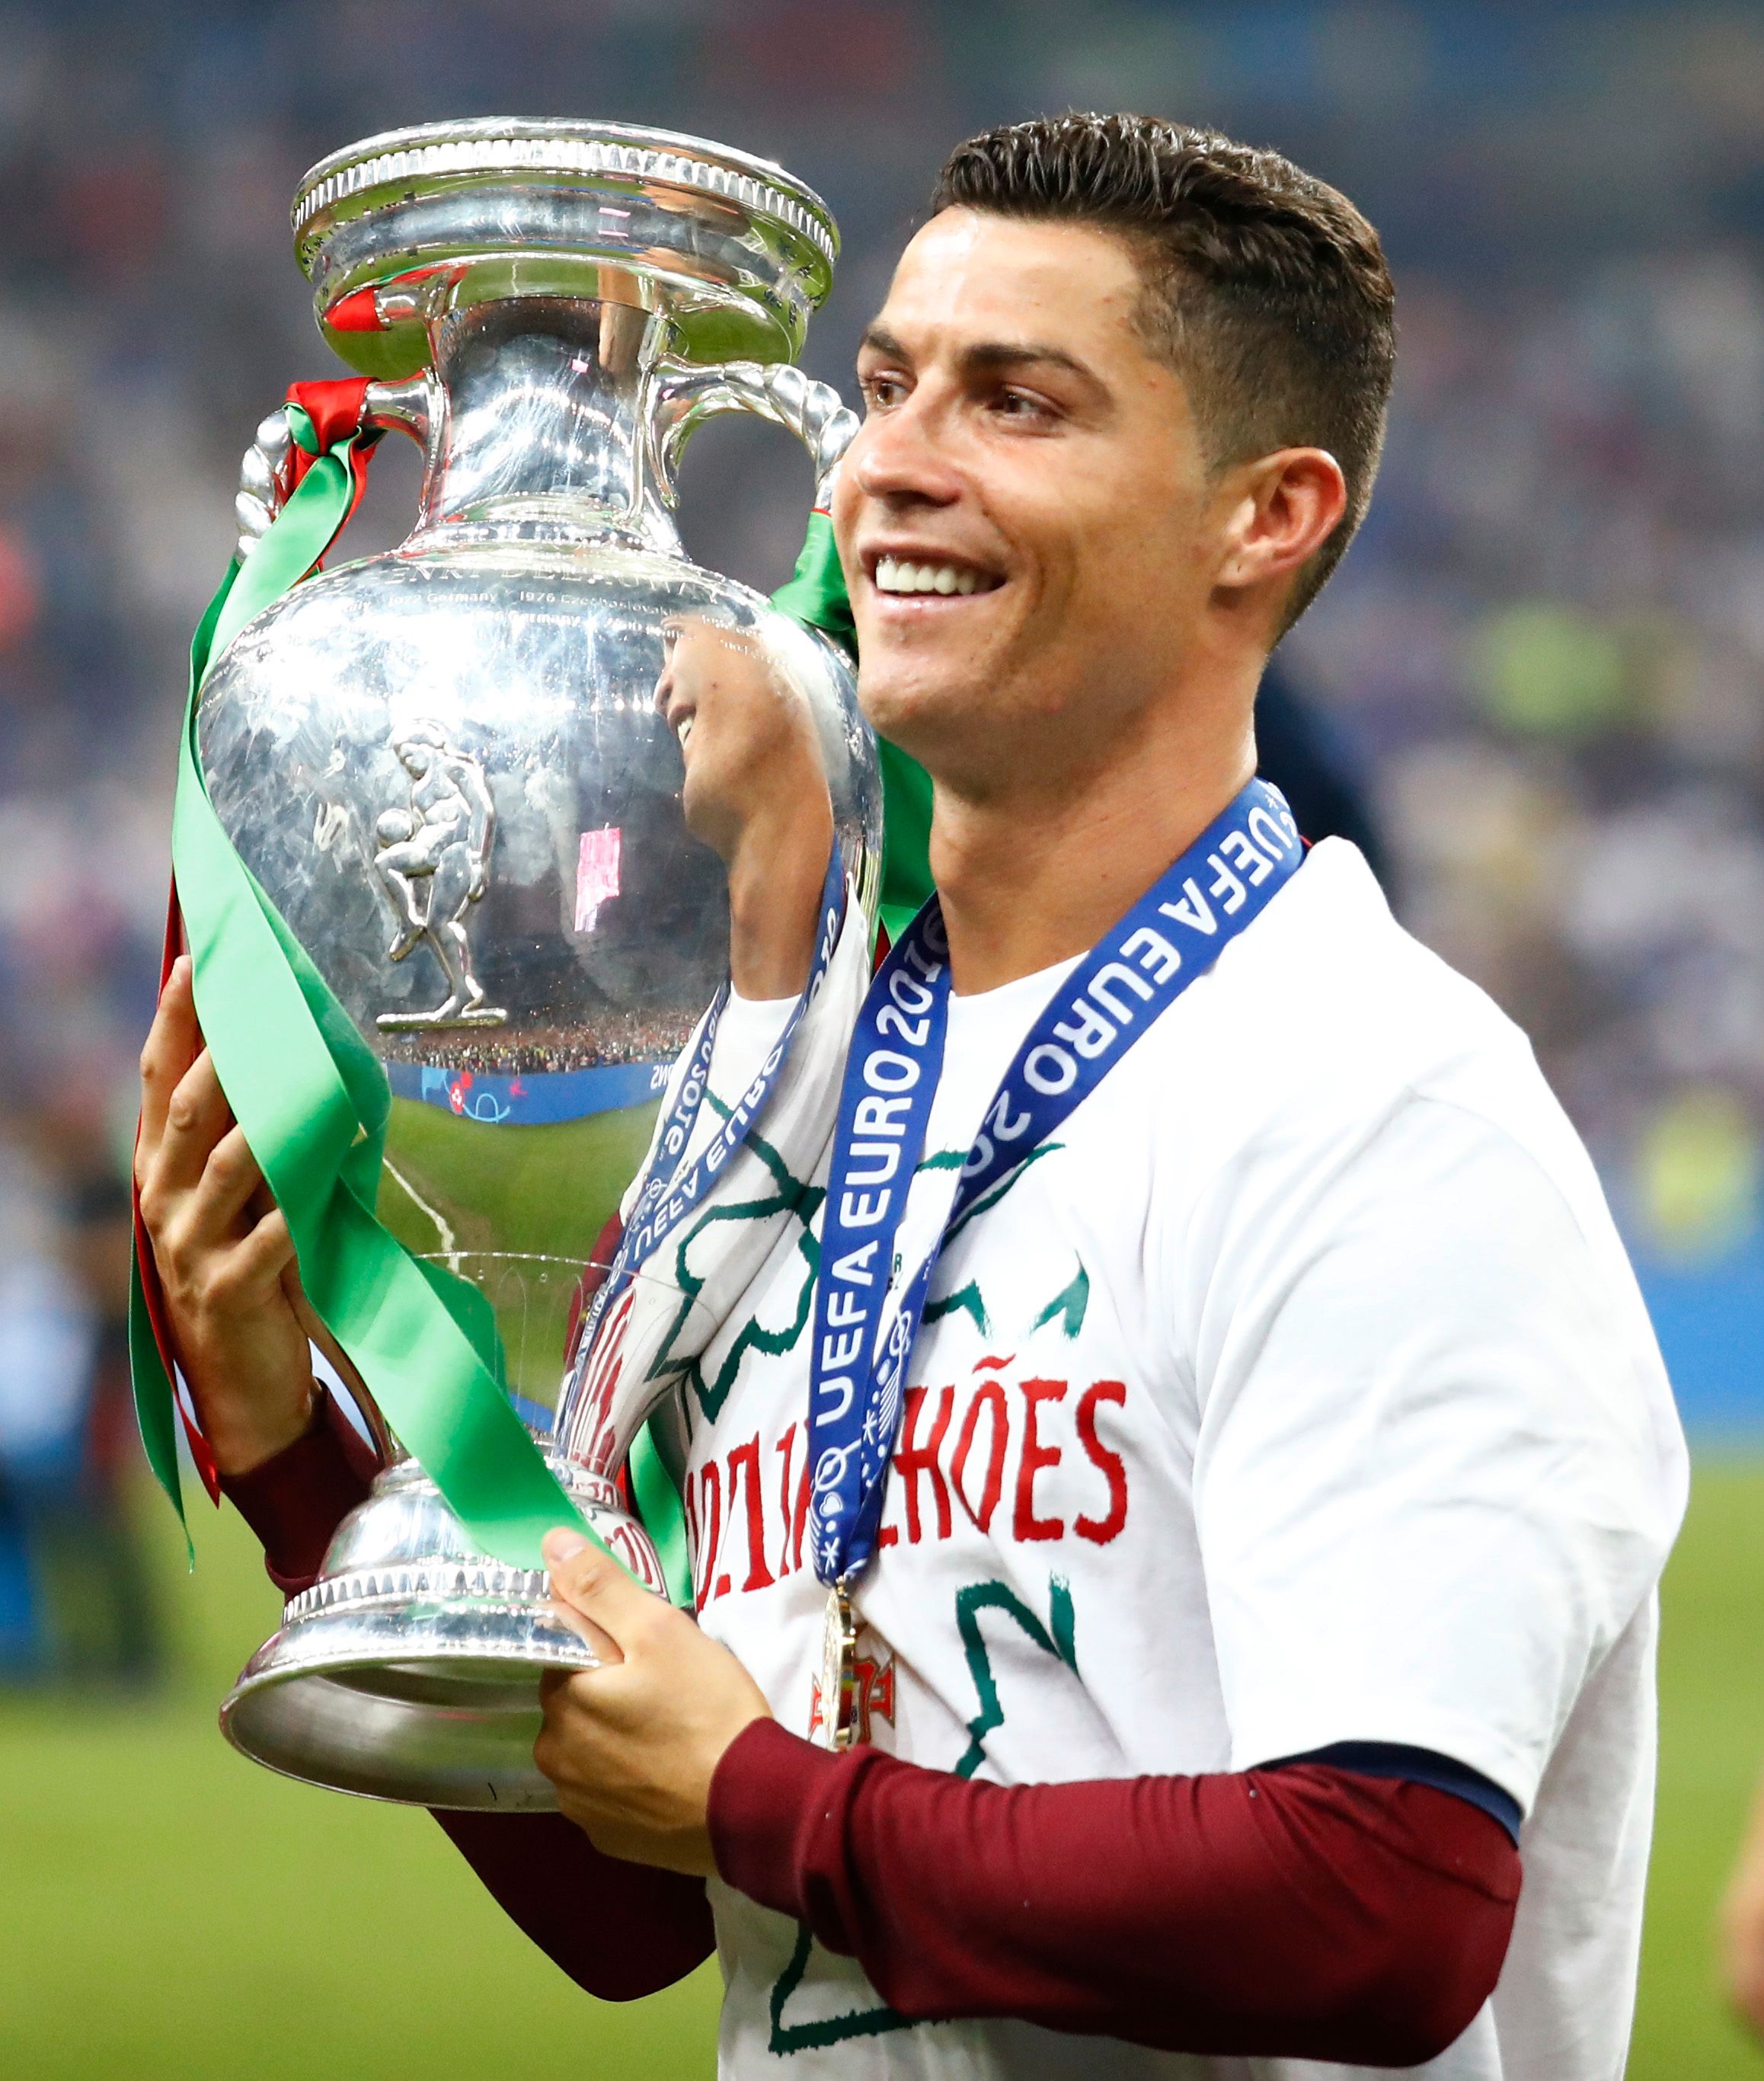 Ronaldo lifts the Euros trophy.